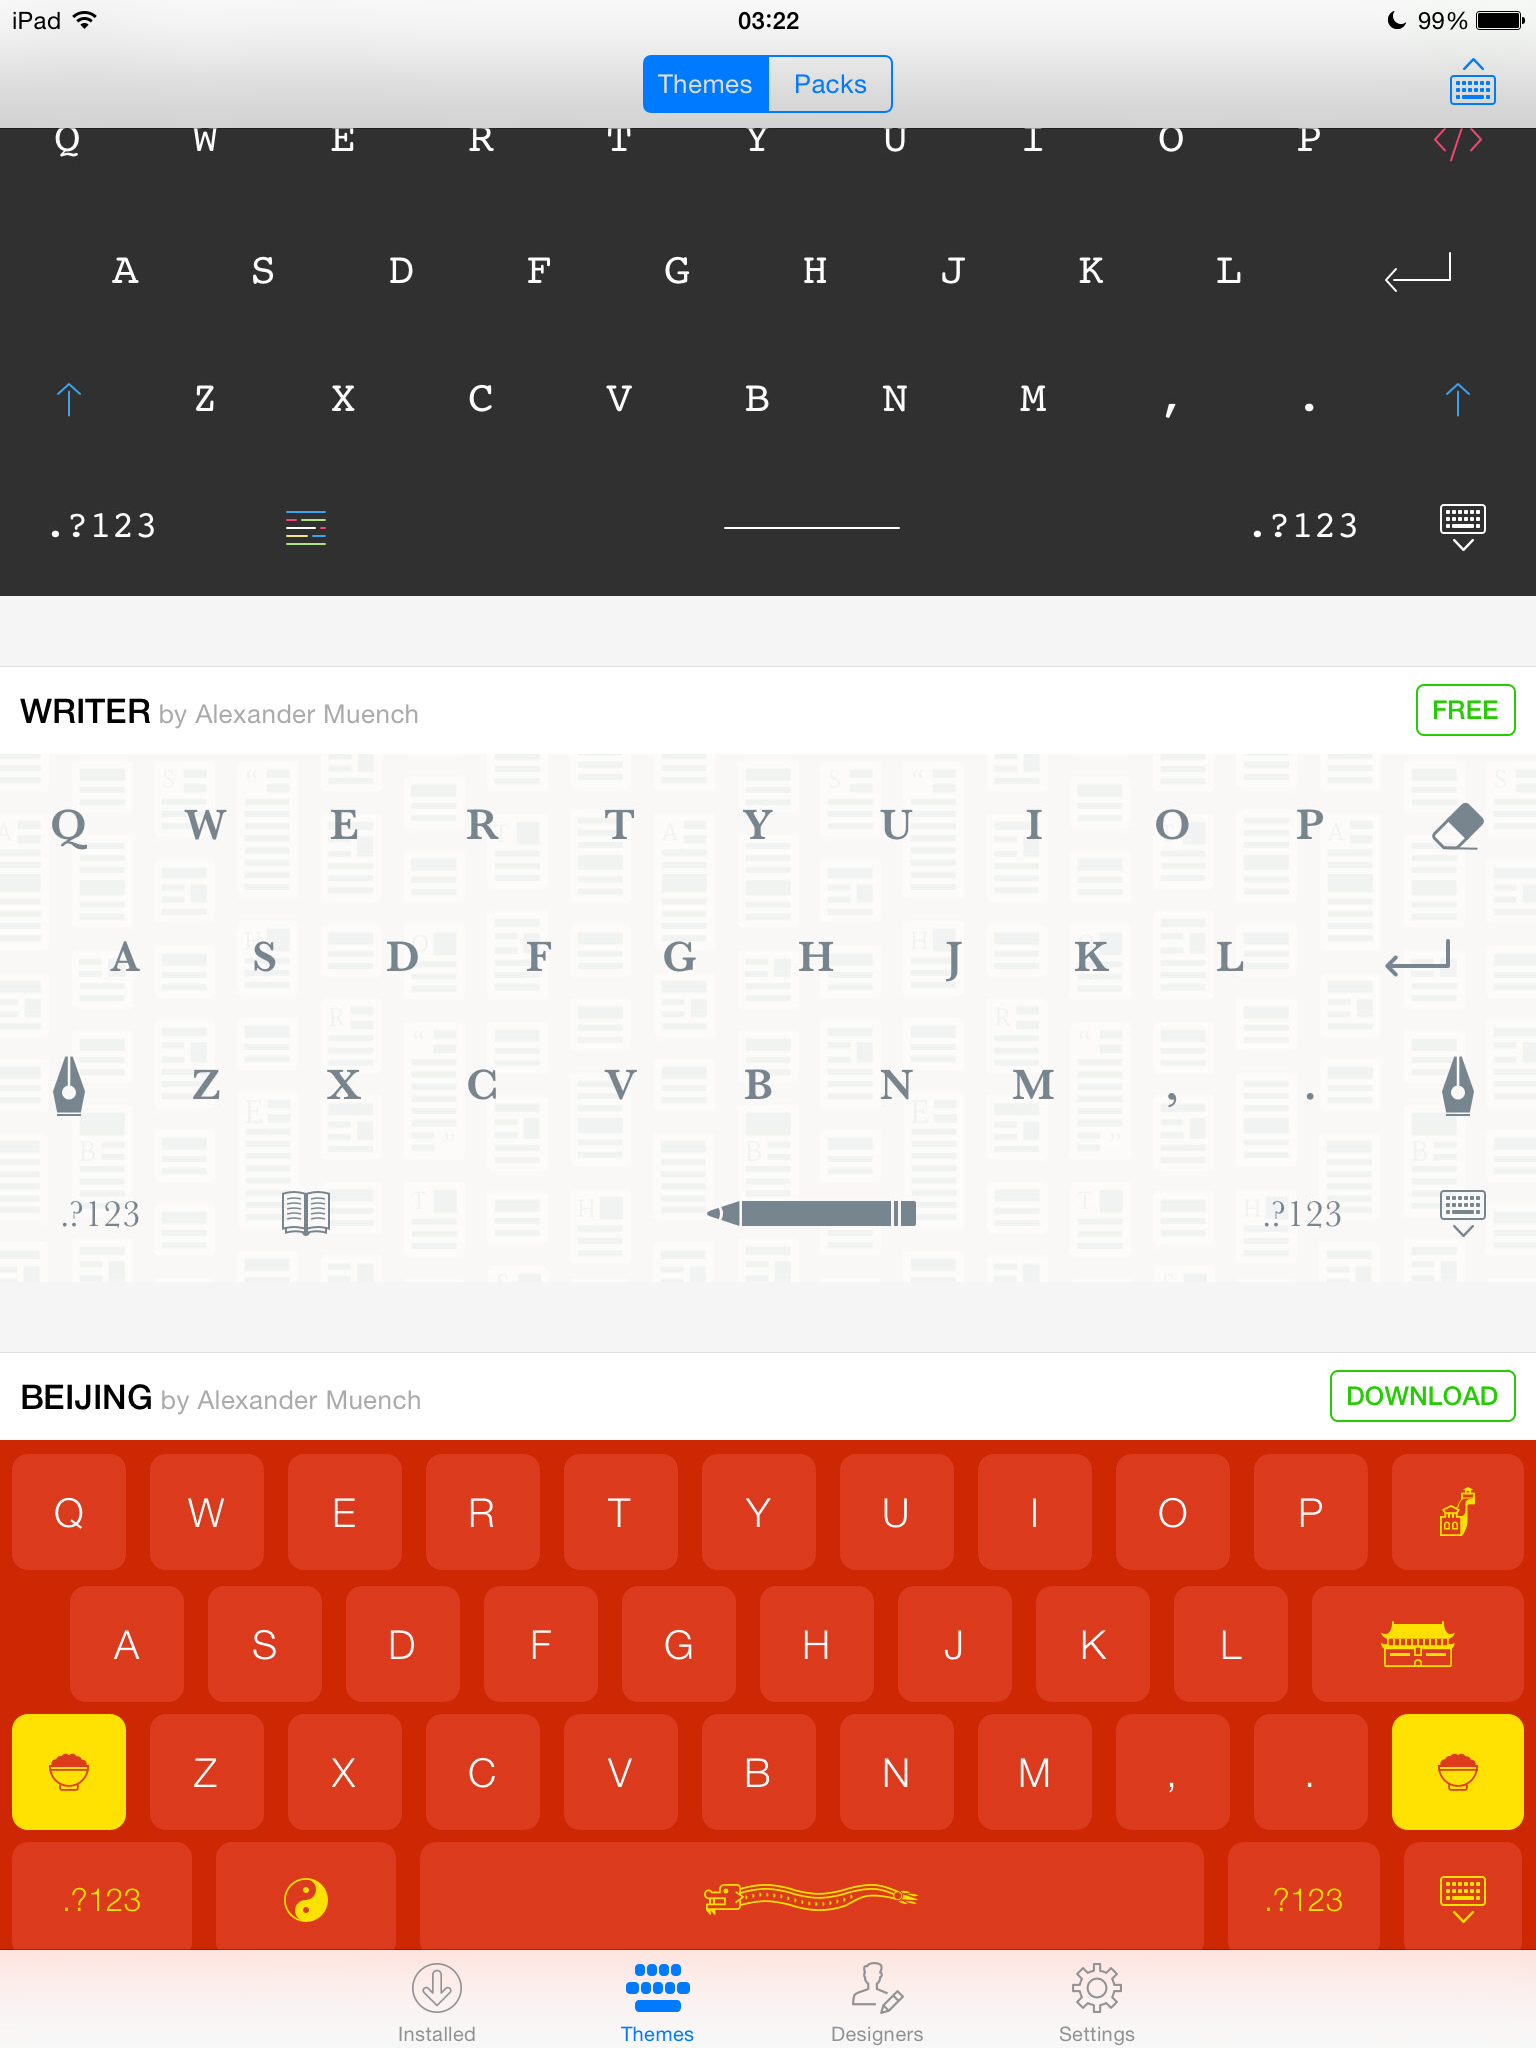 Themeboard 1.0 for iOS (keyboard showcases 003)